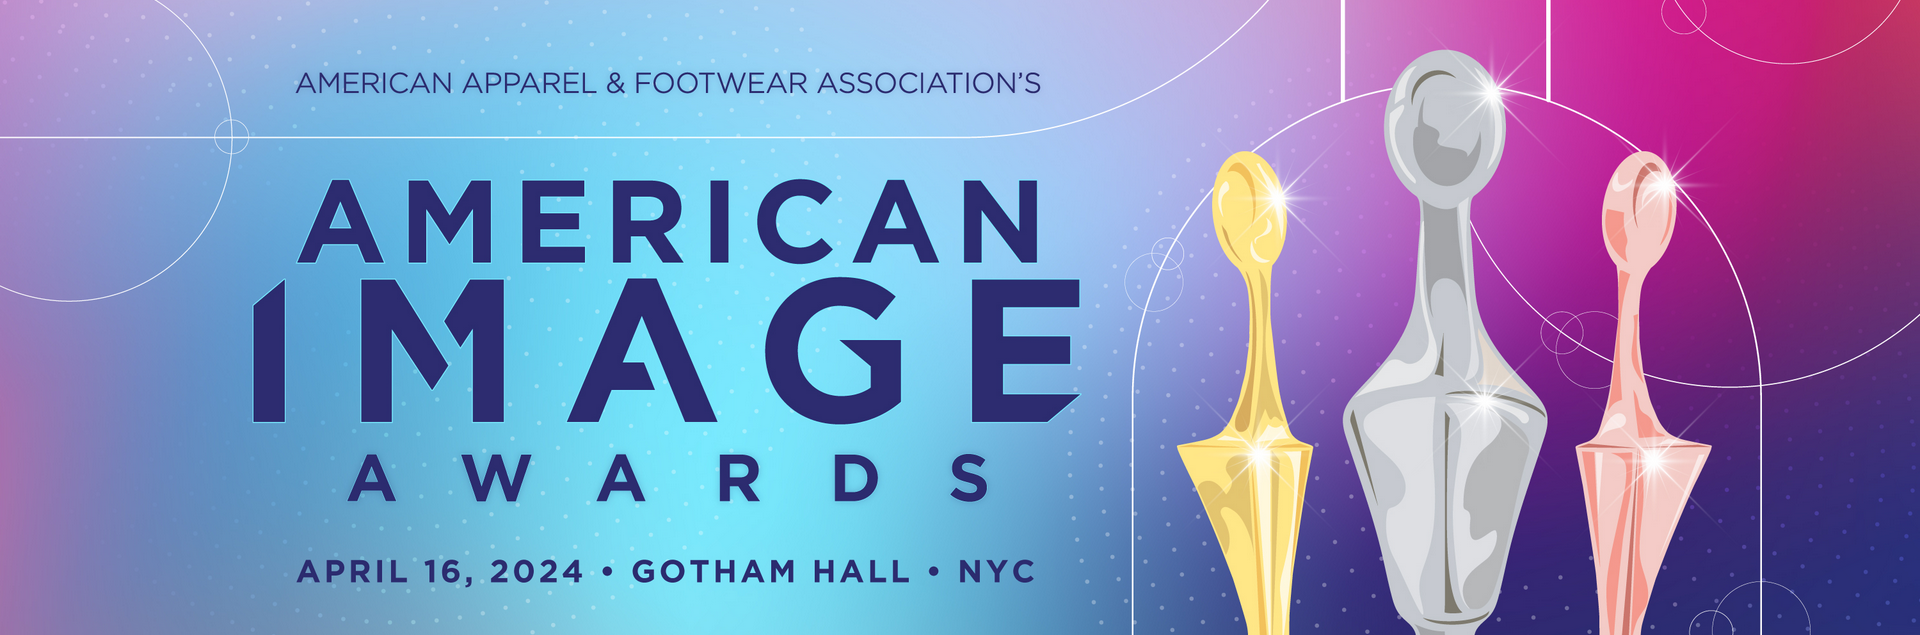 American Image Awards